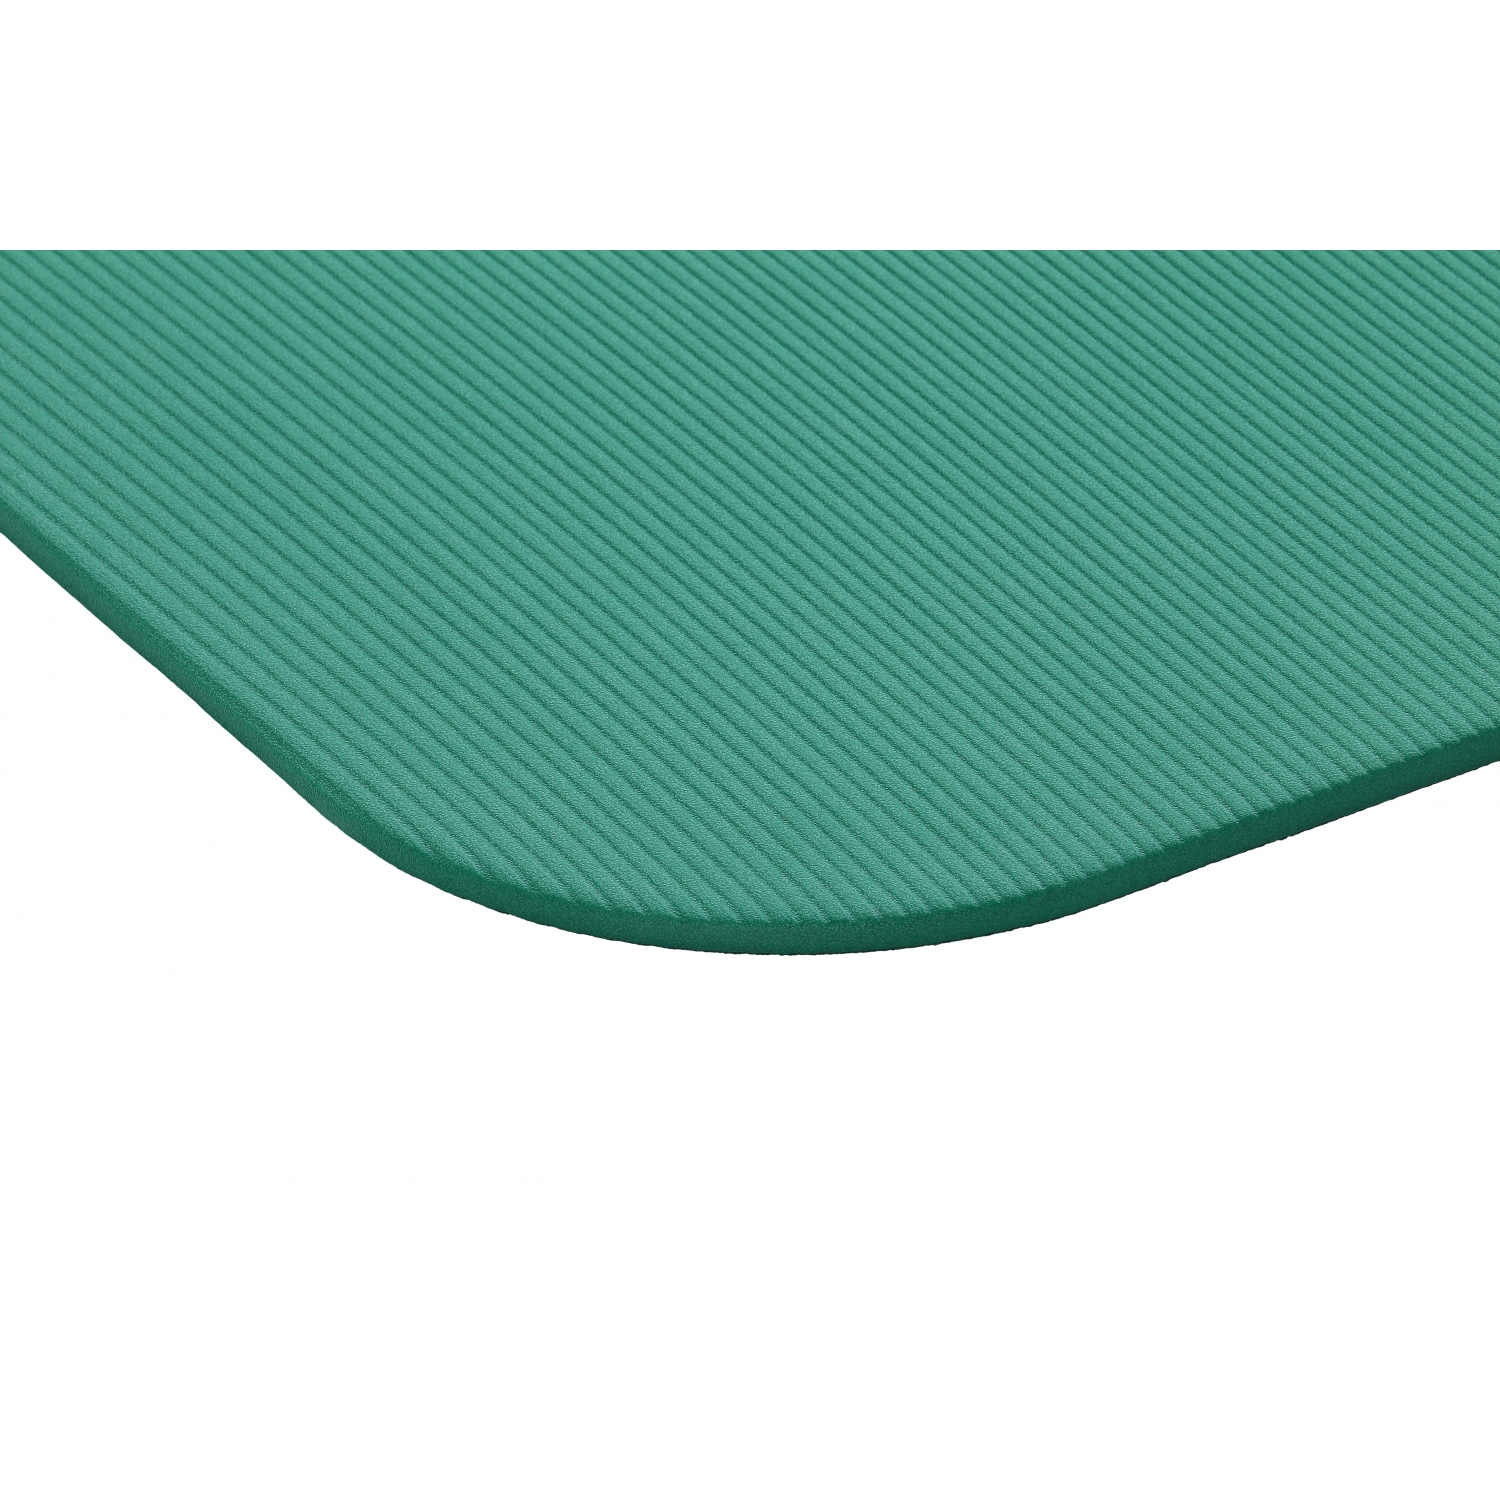 Airex tapis Corona - 100 x 185 x 1,5 cm - vert